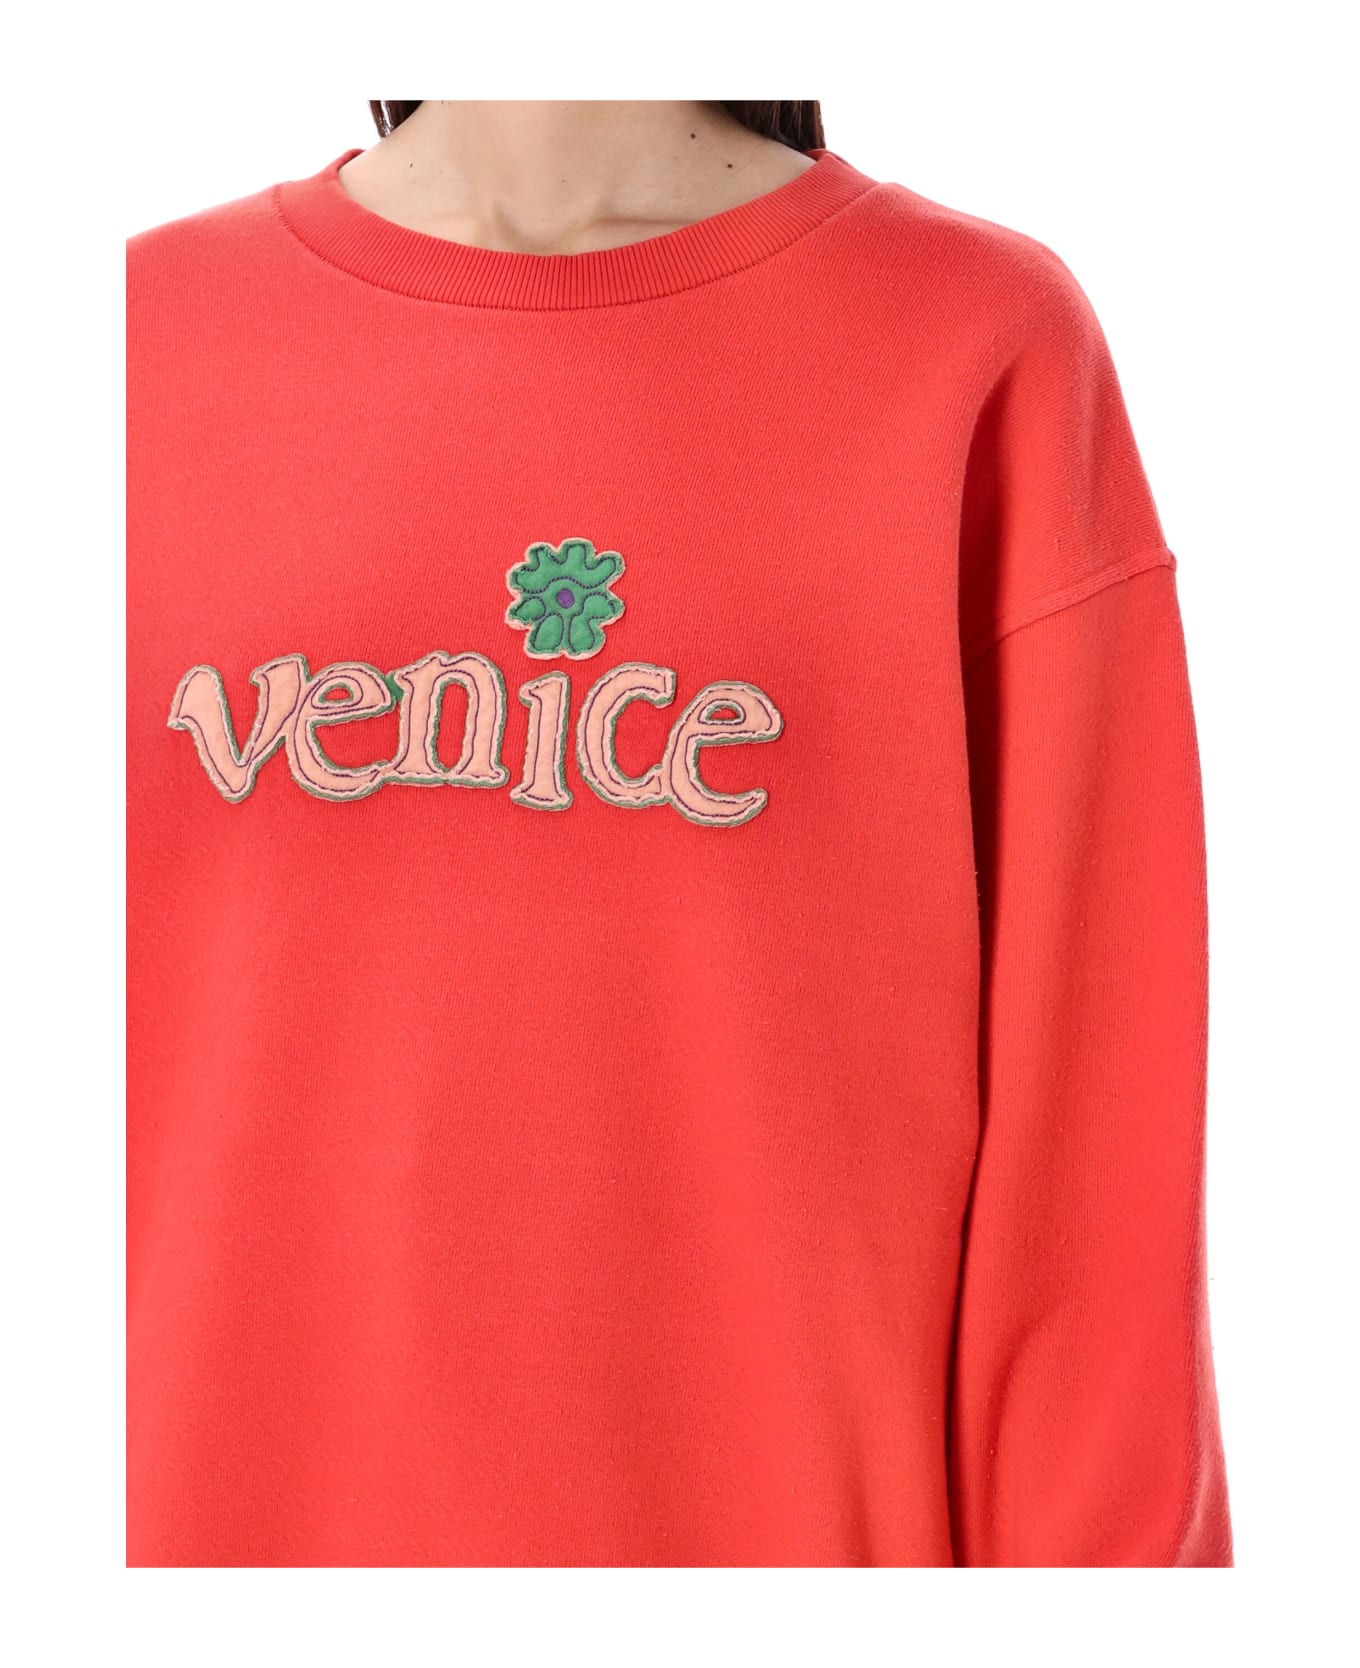 ERL Venice Sweatshirt - RED フリース